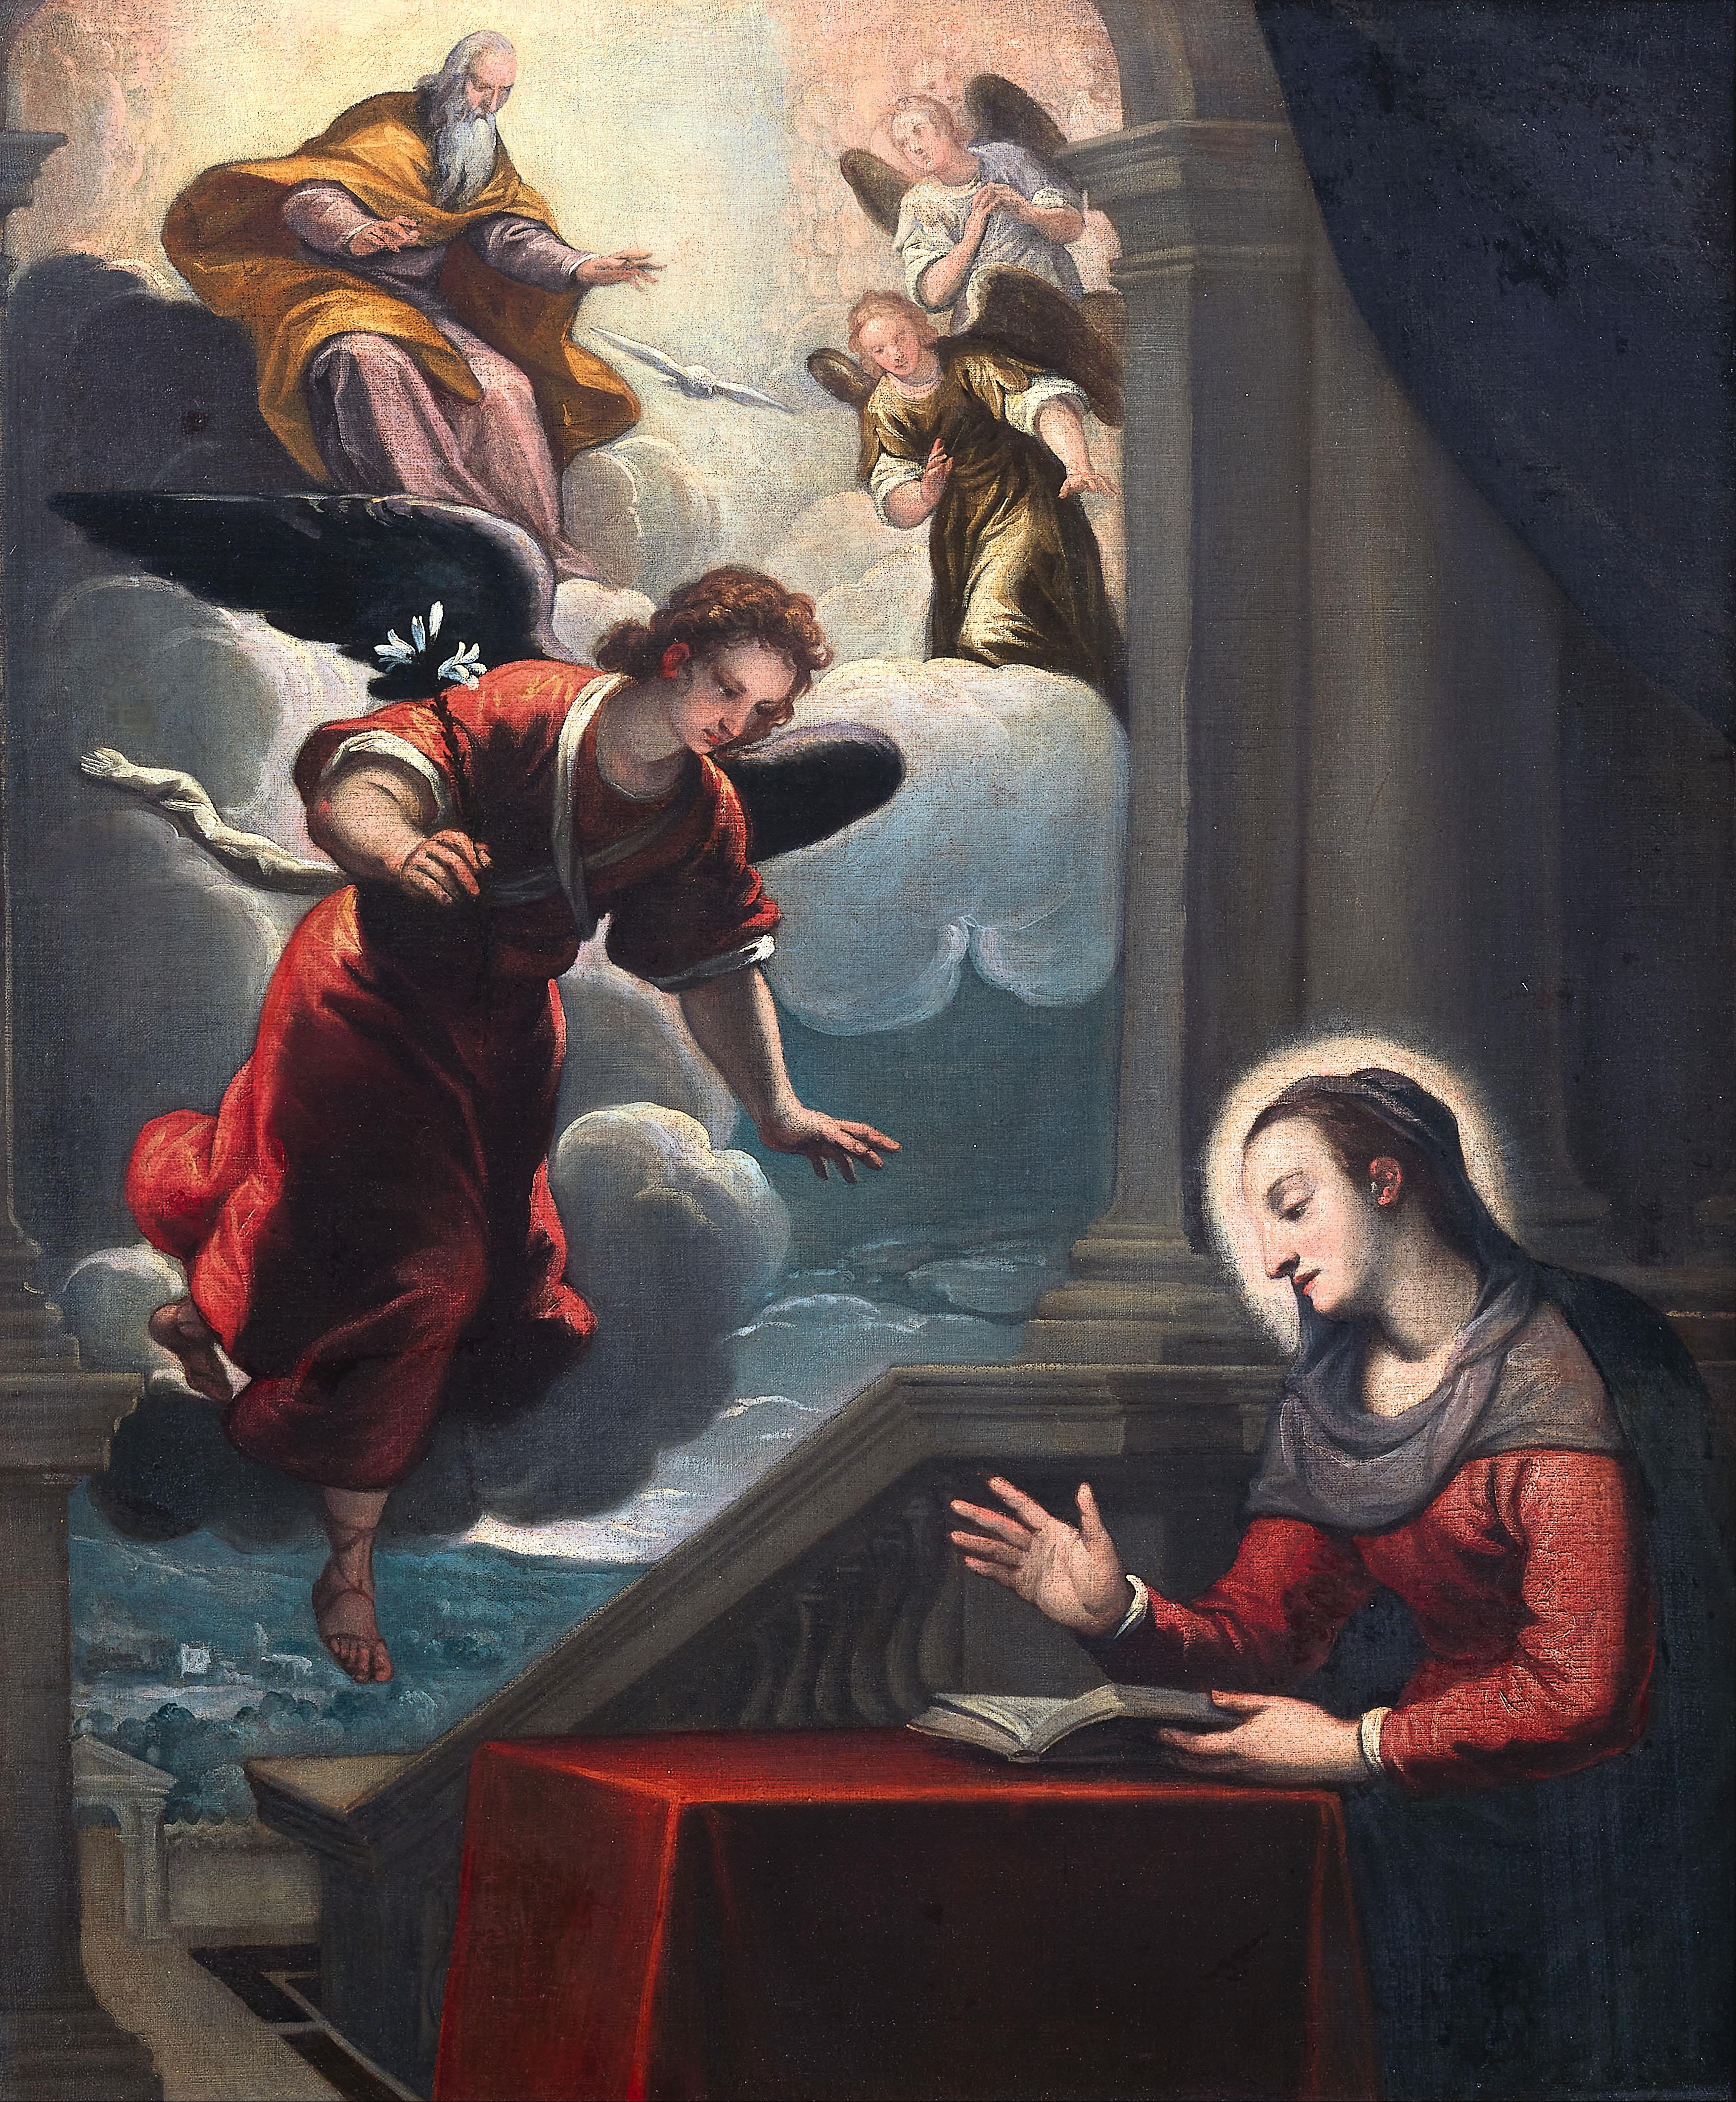 Jacopo Negretti, called Palma Il Giovane, circle of - The Annunciation - image-1